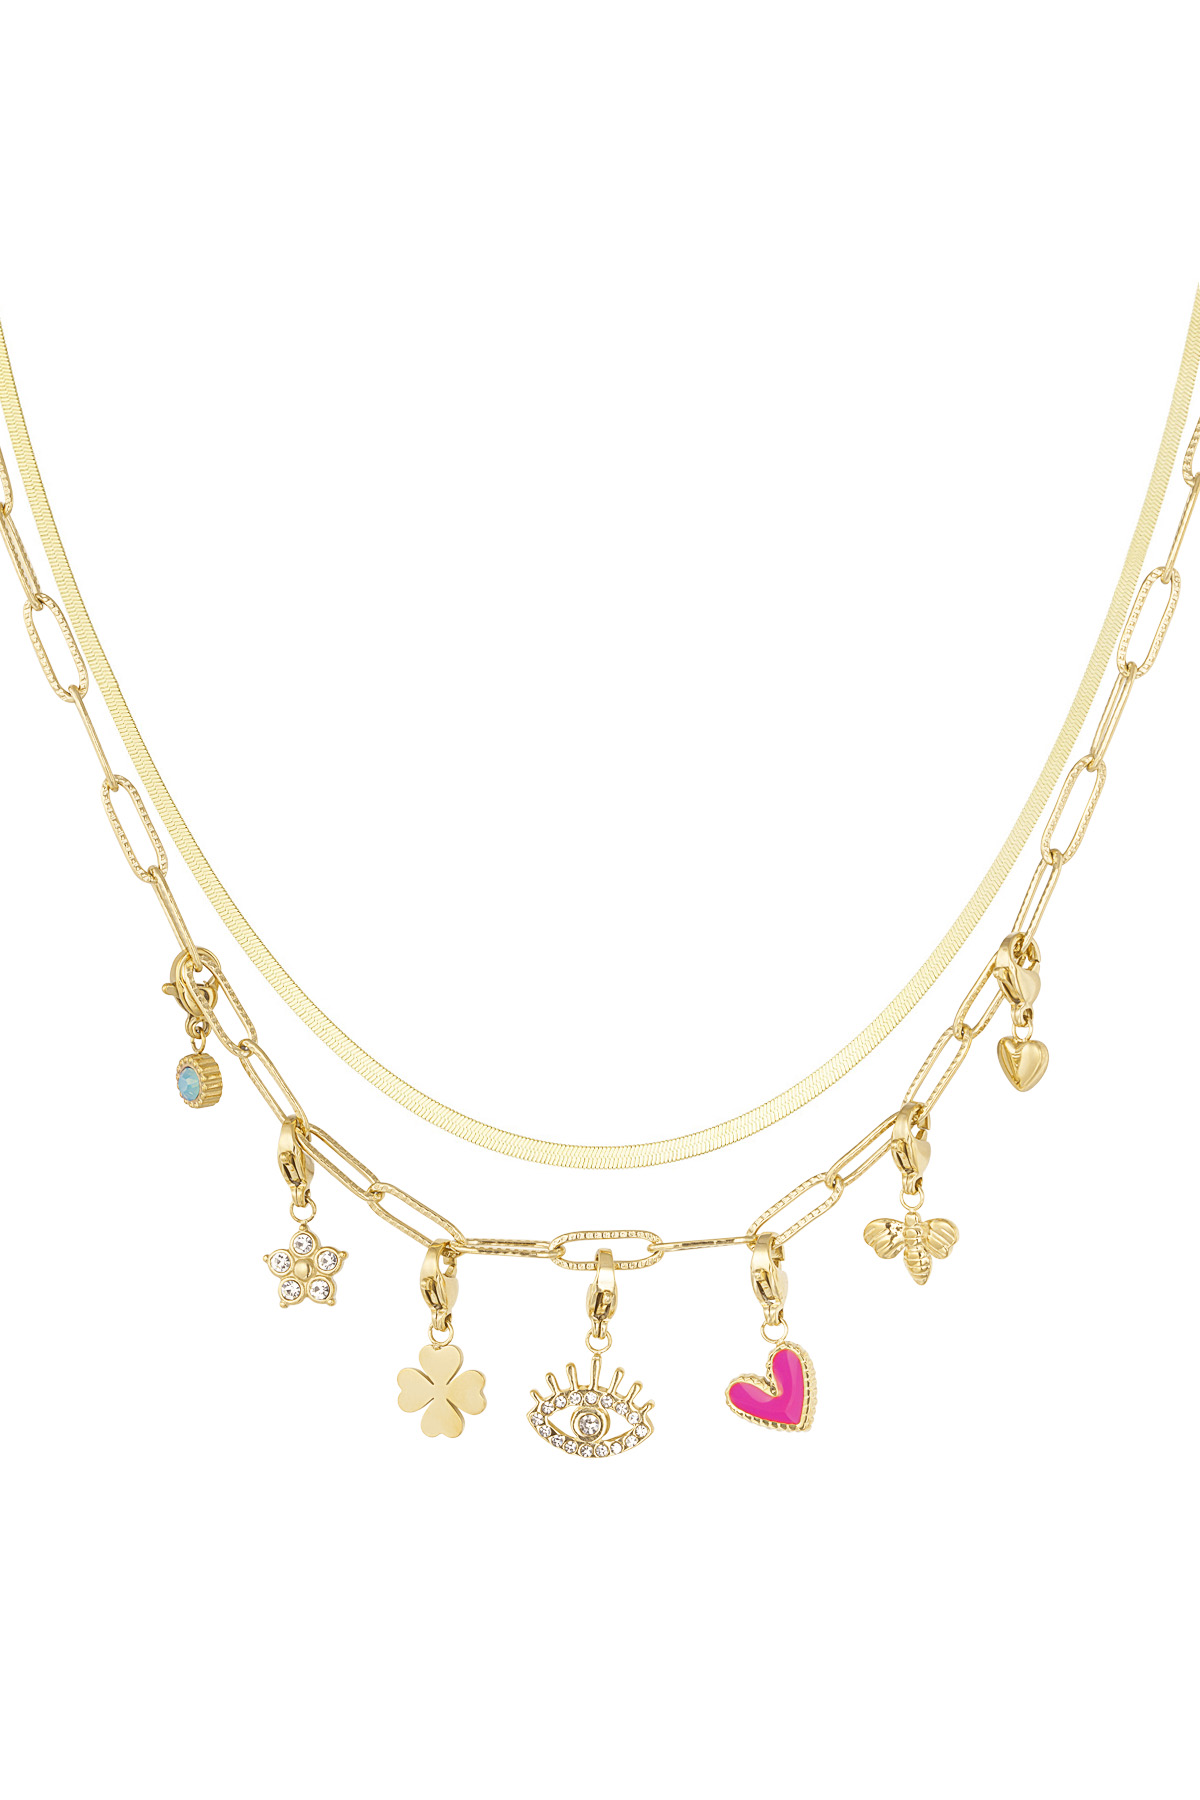 Charm necklace lovey dovey - gold h5 